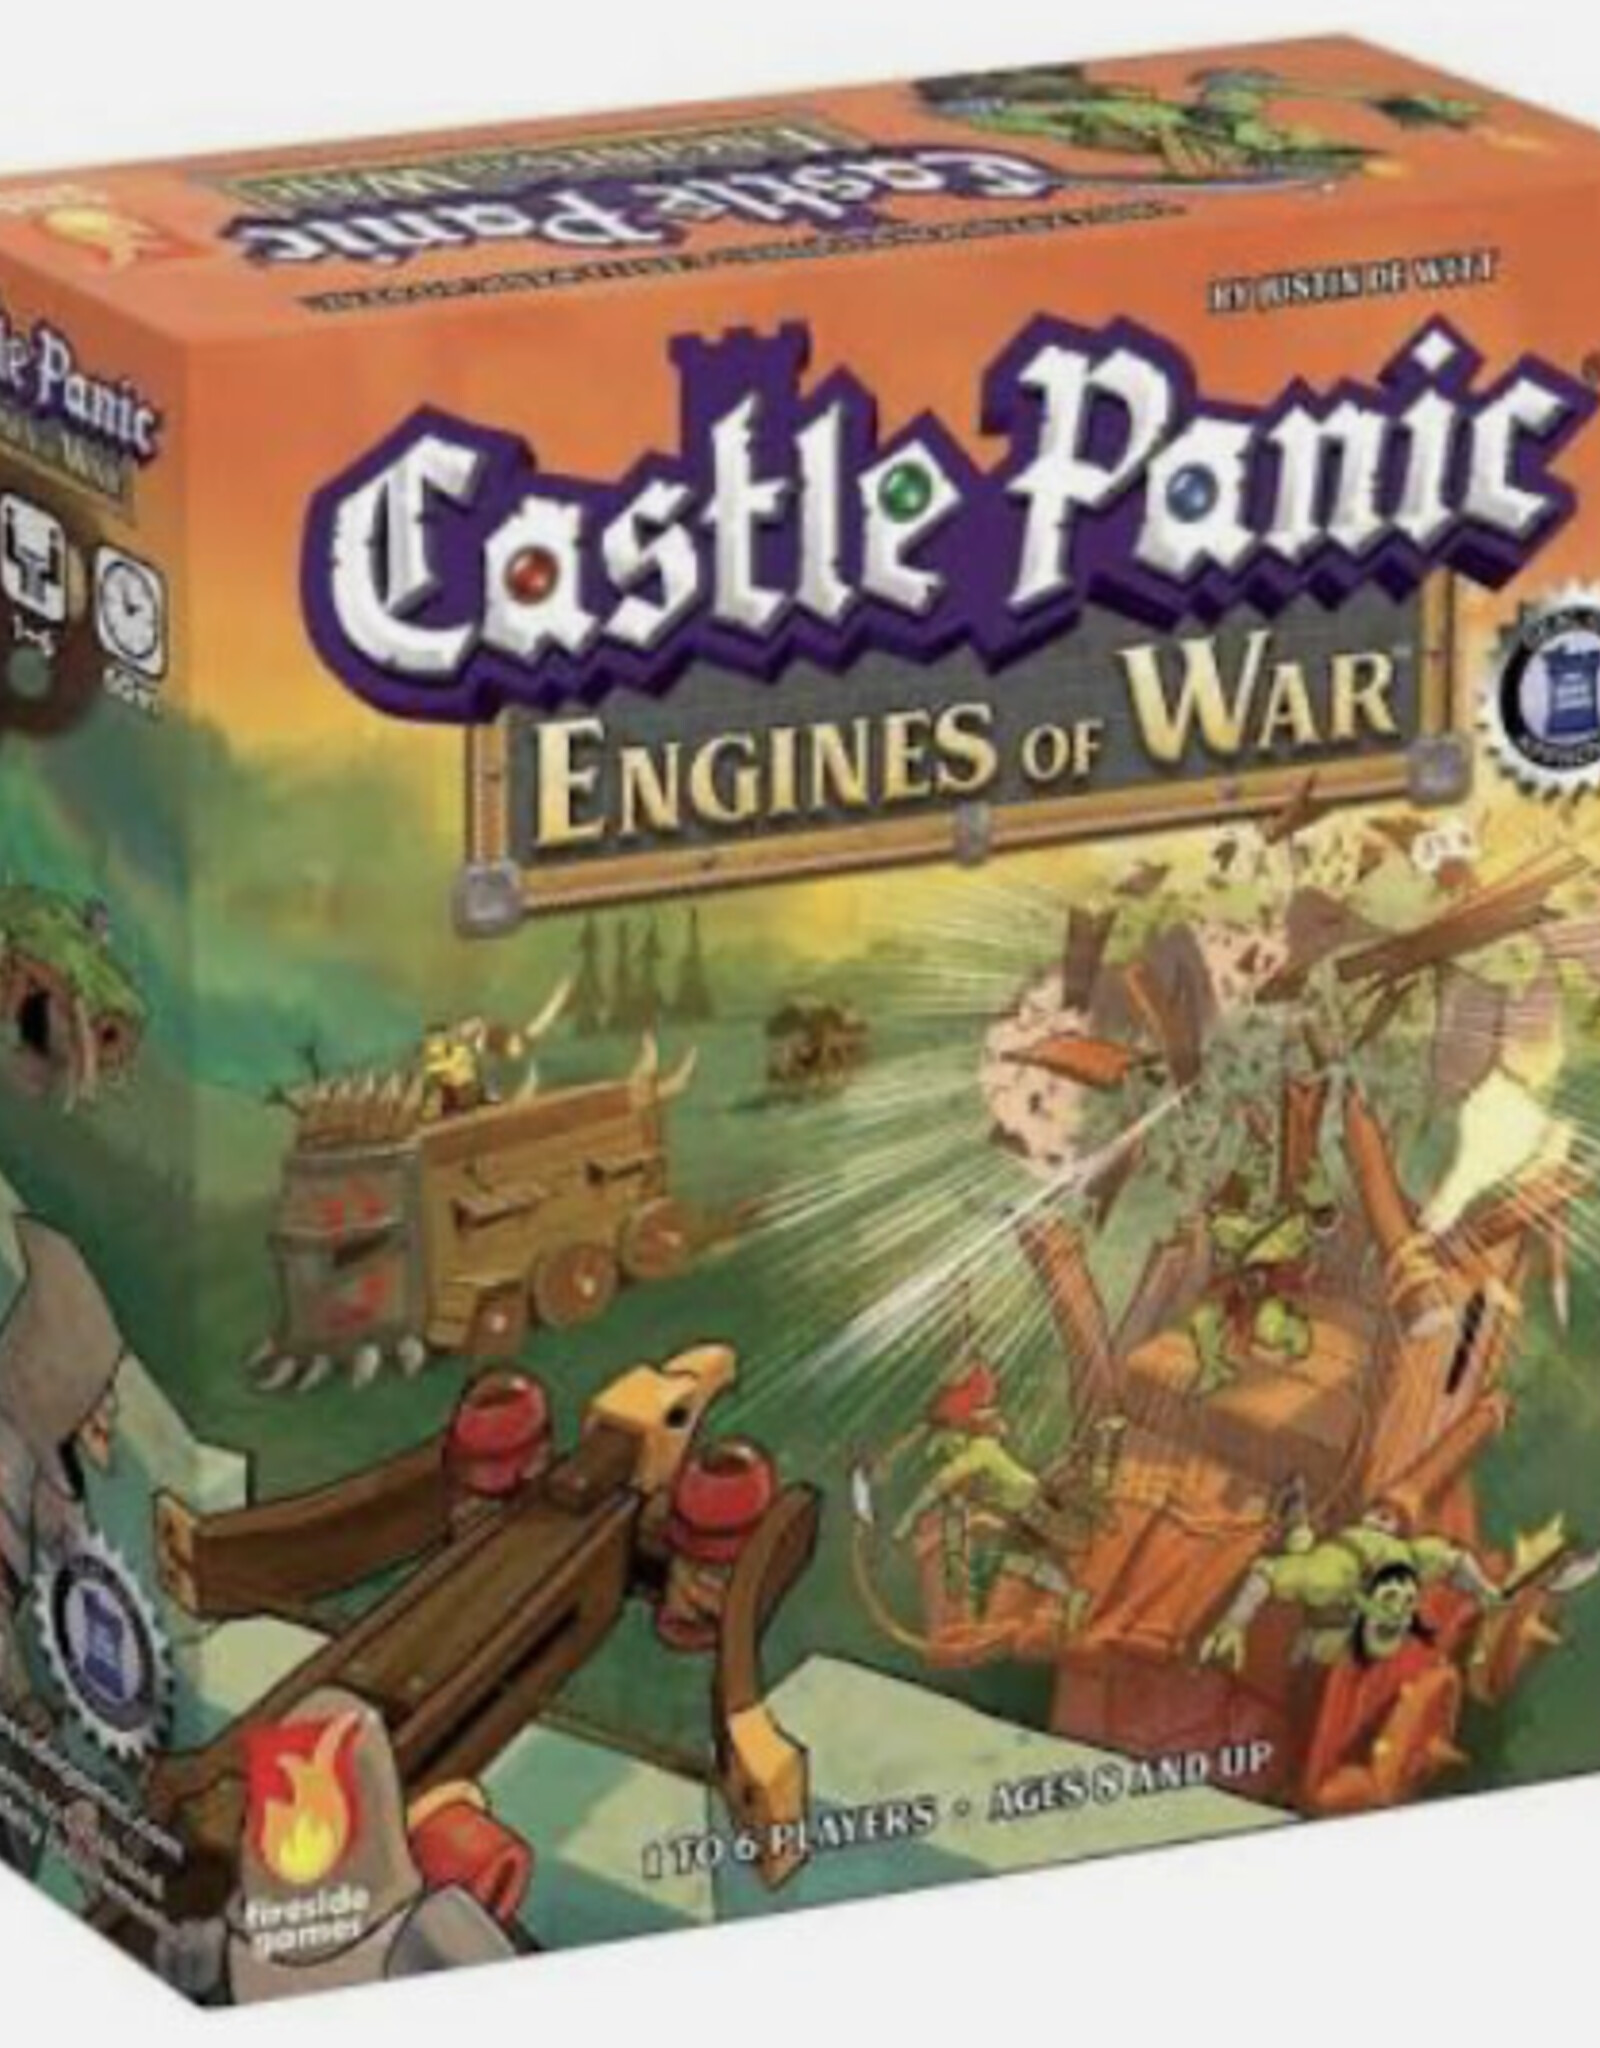 Fireside Engine of War : Castle Panic Expansion